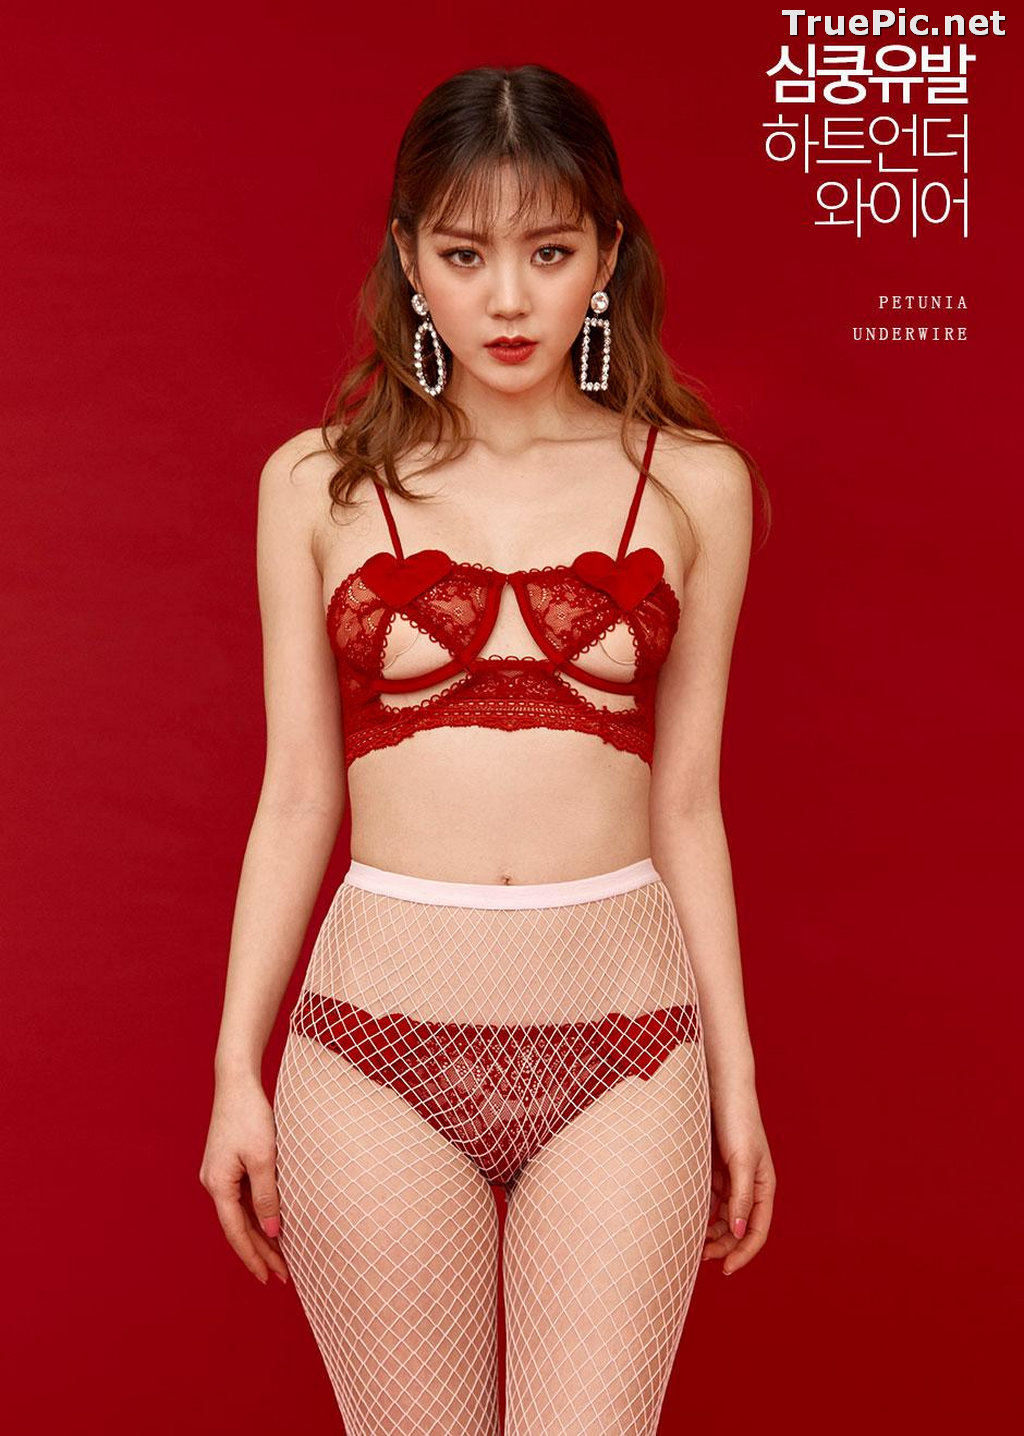 Image Korean Model - Lee Chae Eun - Xmas Lingerie Set - TruePic.net (48 pictures) - Picture-4